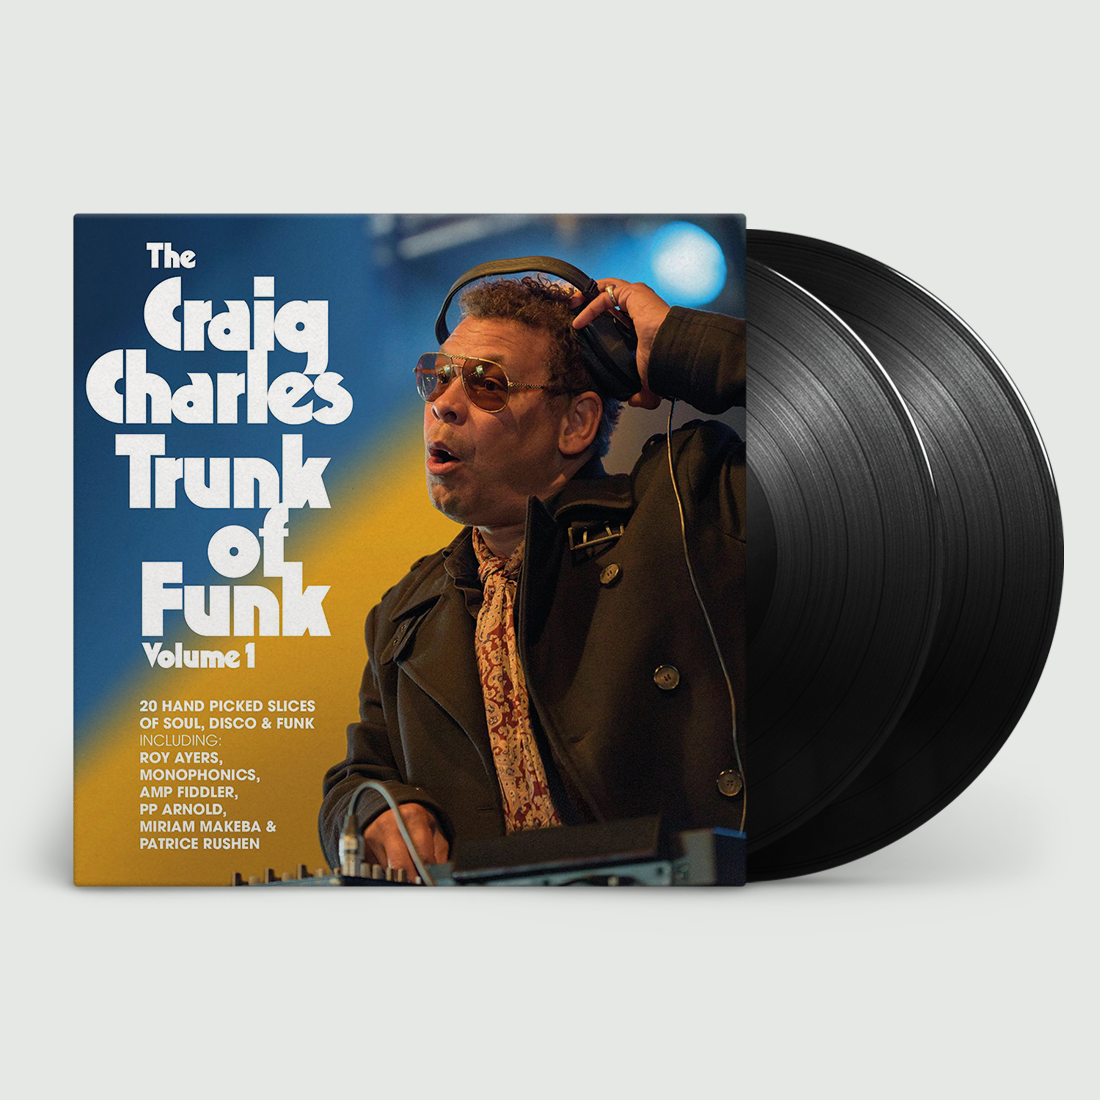 The Craig Charles Trunk of Funk Vol. 1: Signed Gatefold Vinyl 2LP